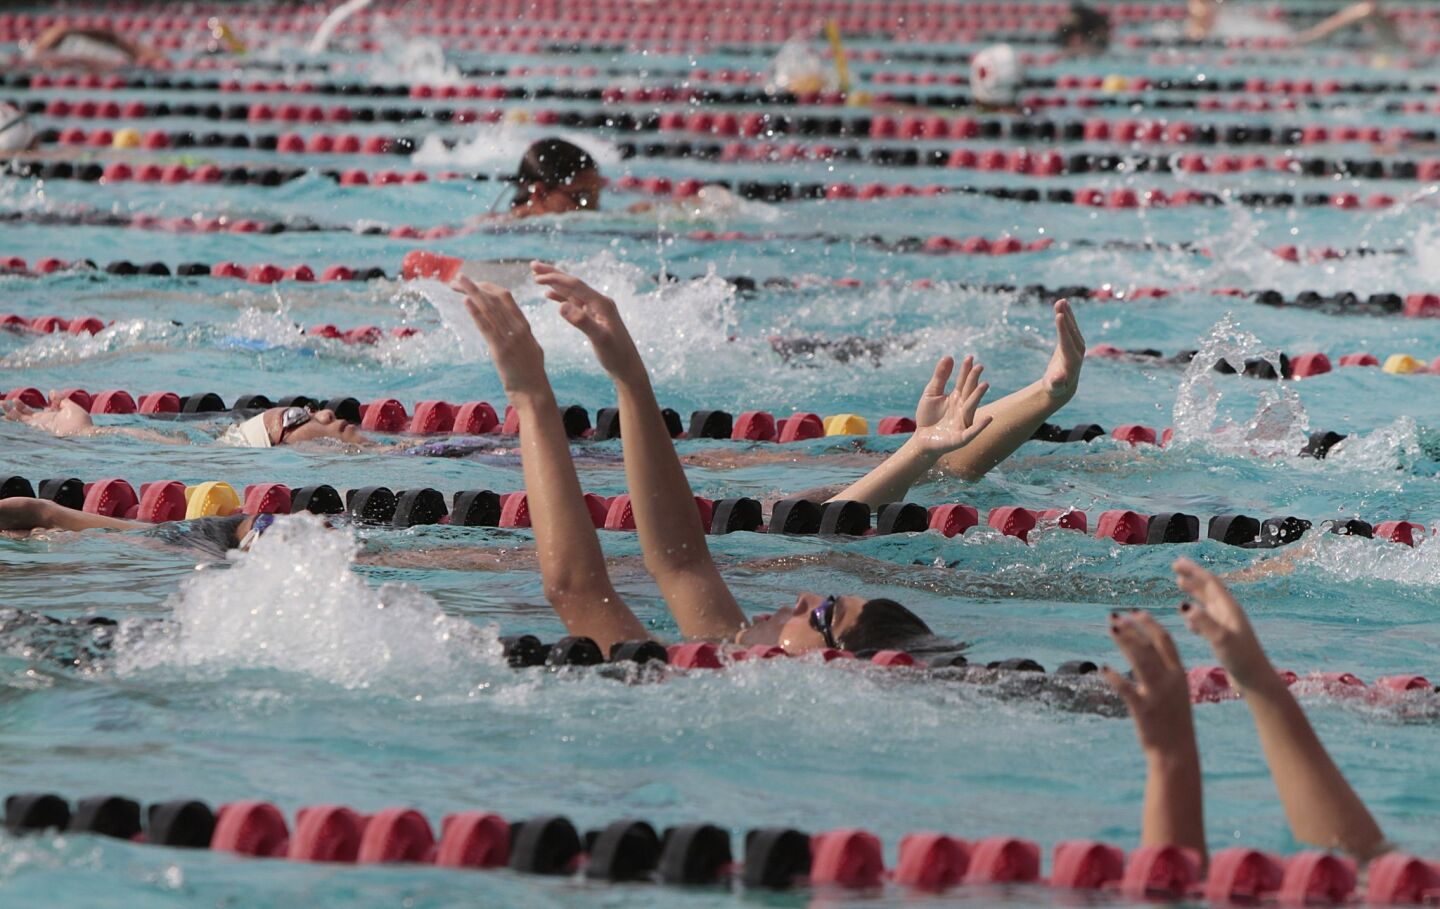 The Rose Bowl Aquatic swim teams practice in the heat at the Pasadena facility.